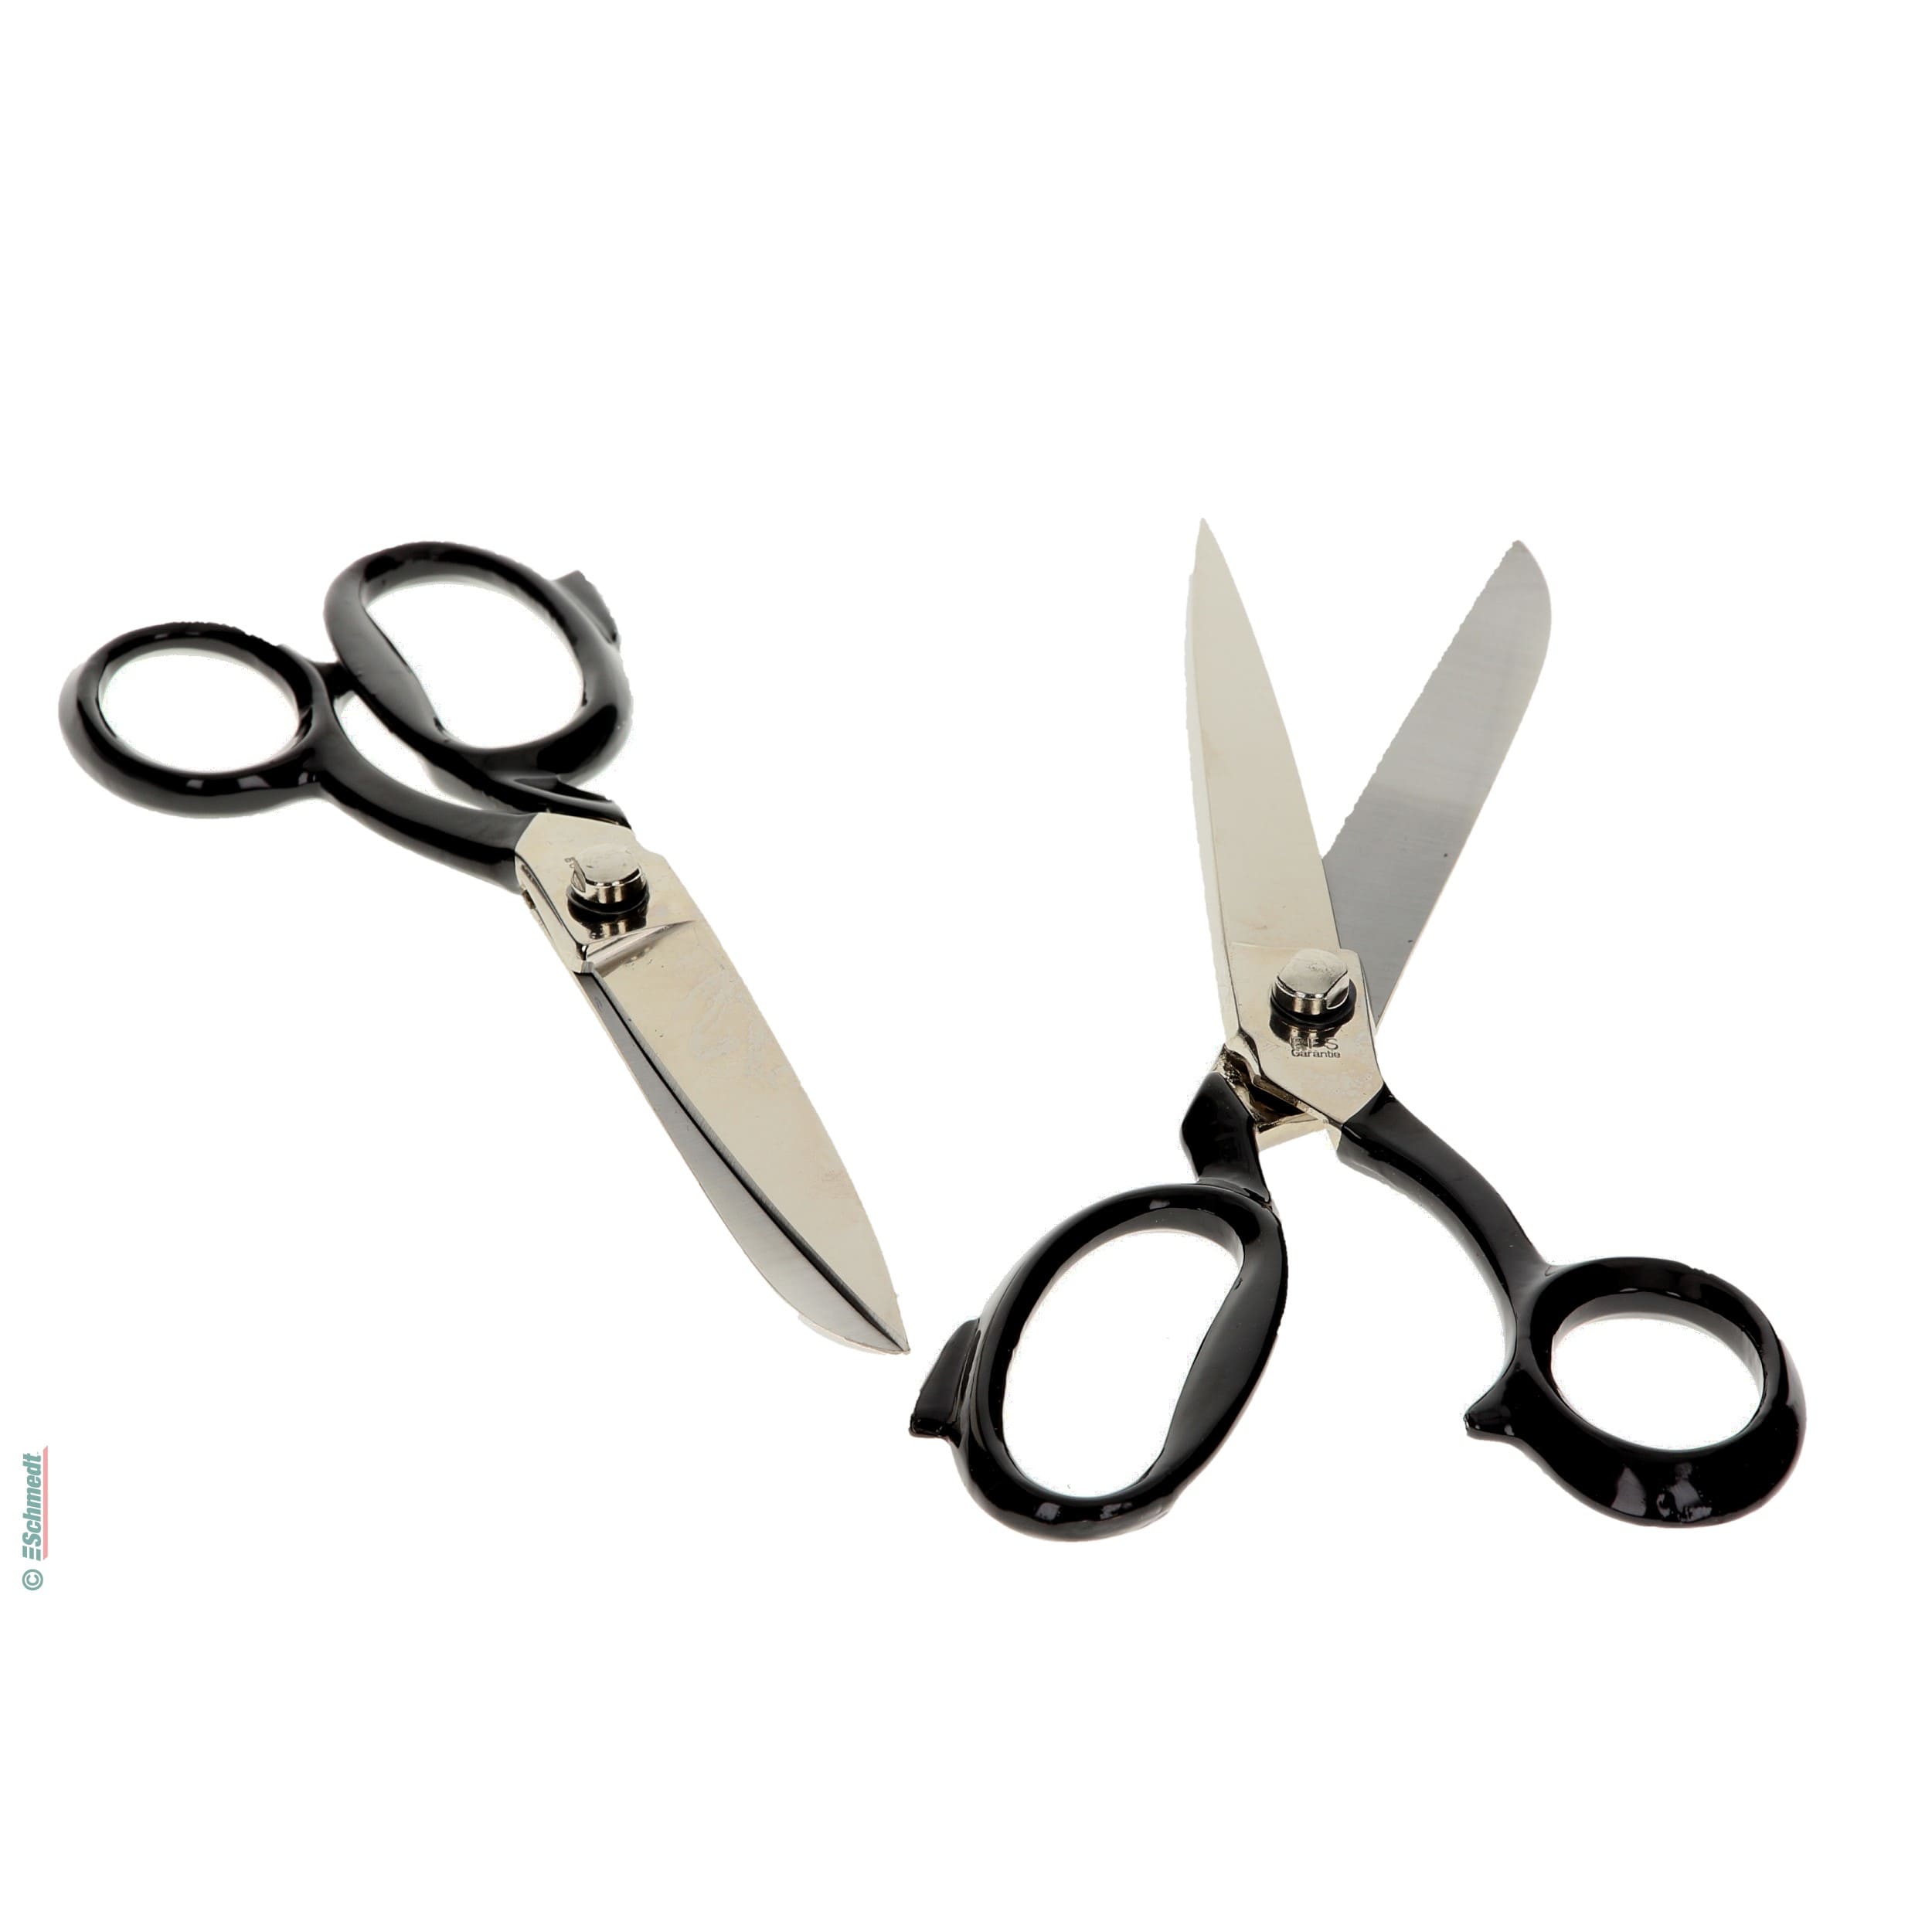 Board scissors - Extra heavy version - » geschmiedet
» chrome-plated...